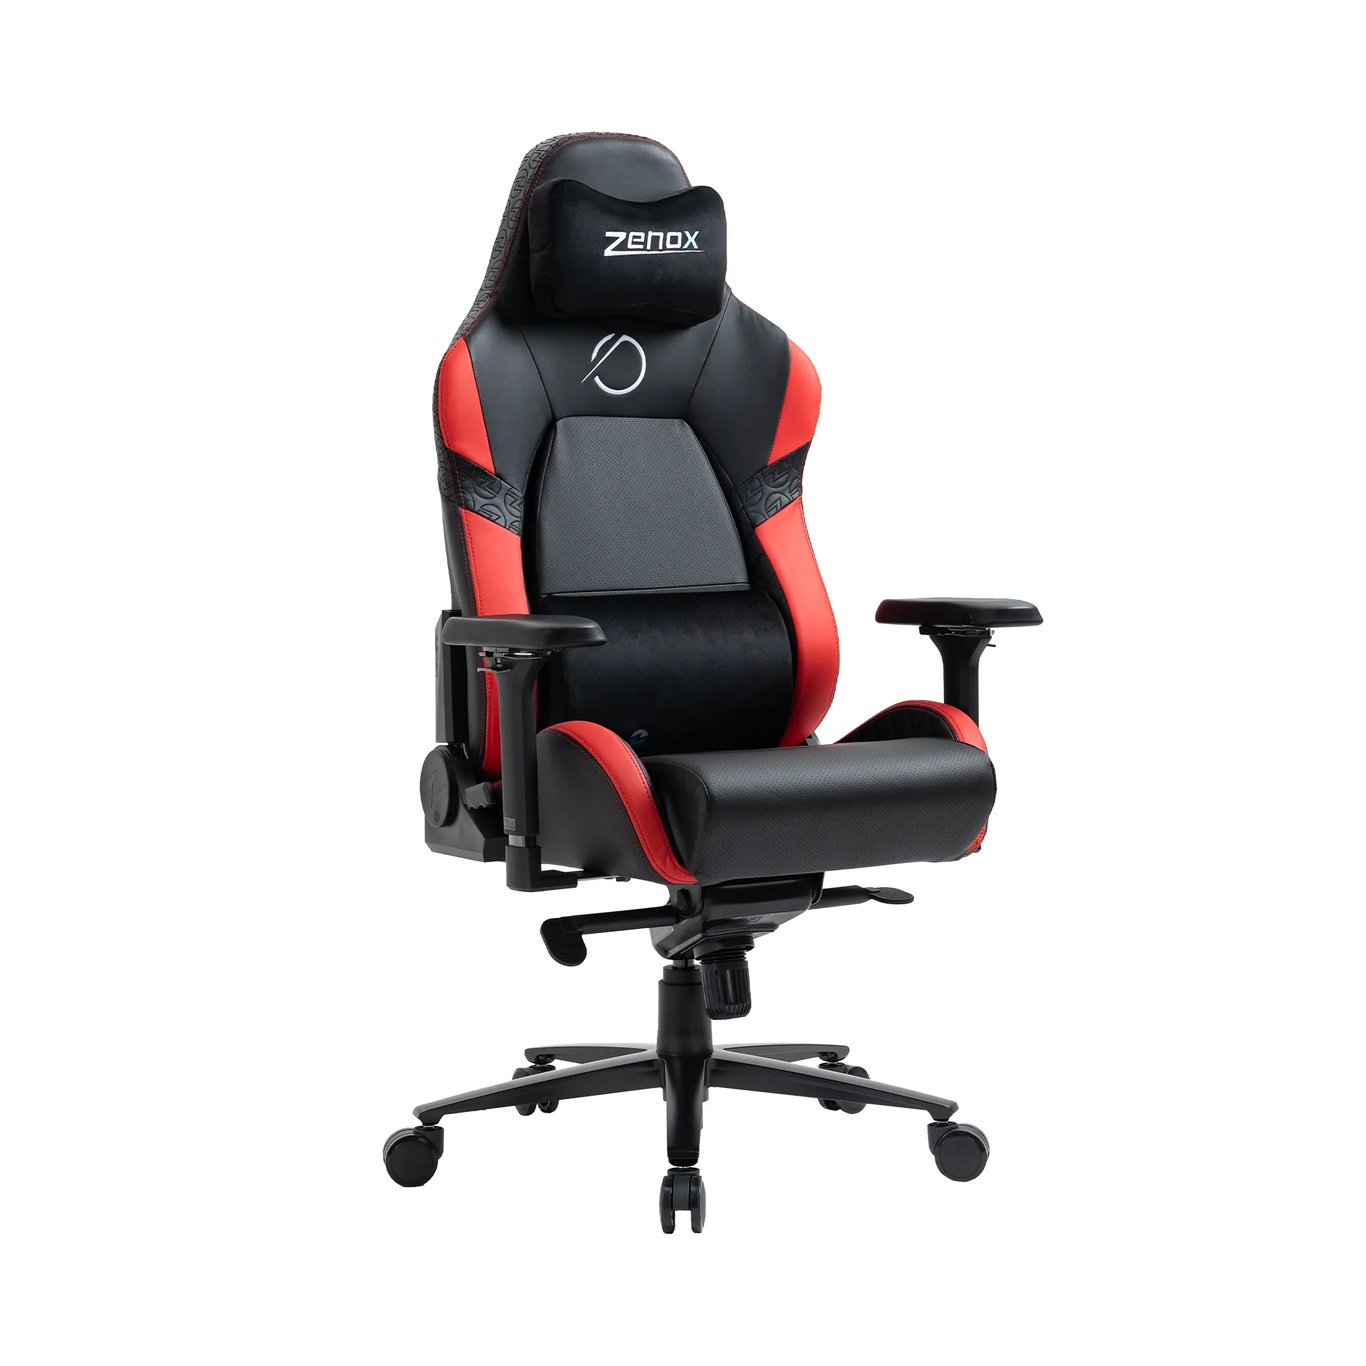 Zenox Jupiter-MK2 Racing Chair 電競椅 - Leather/Red 皮面/紅色